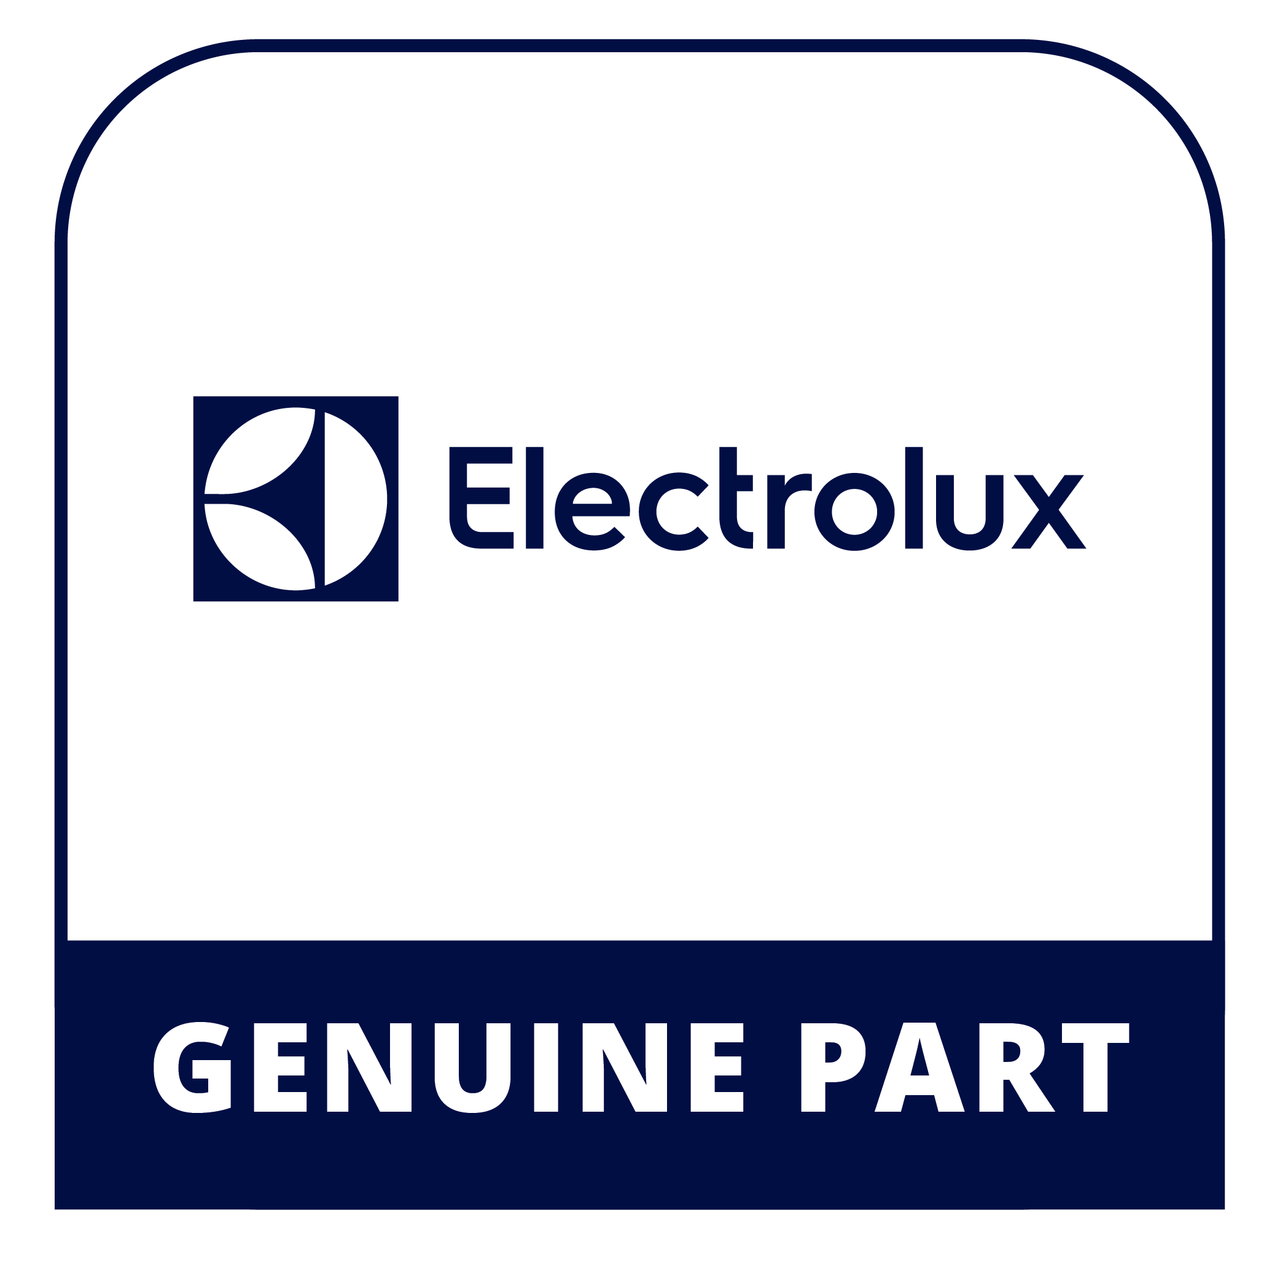 Frigidaire - Electrolux 316032407 Thermostat - Genuine Electrolux Part